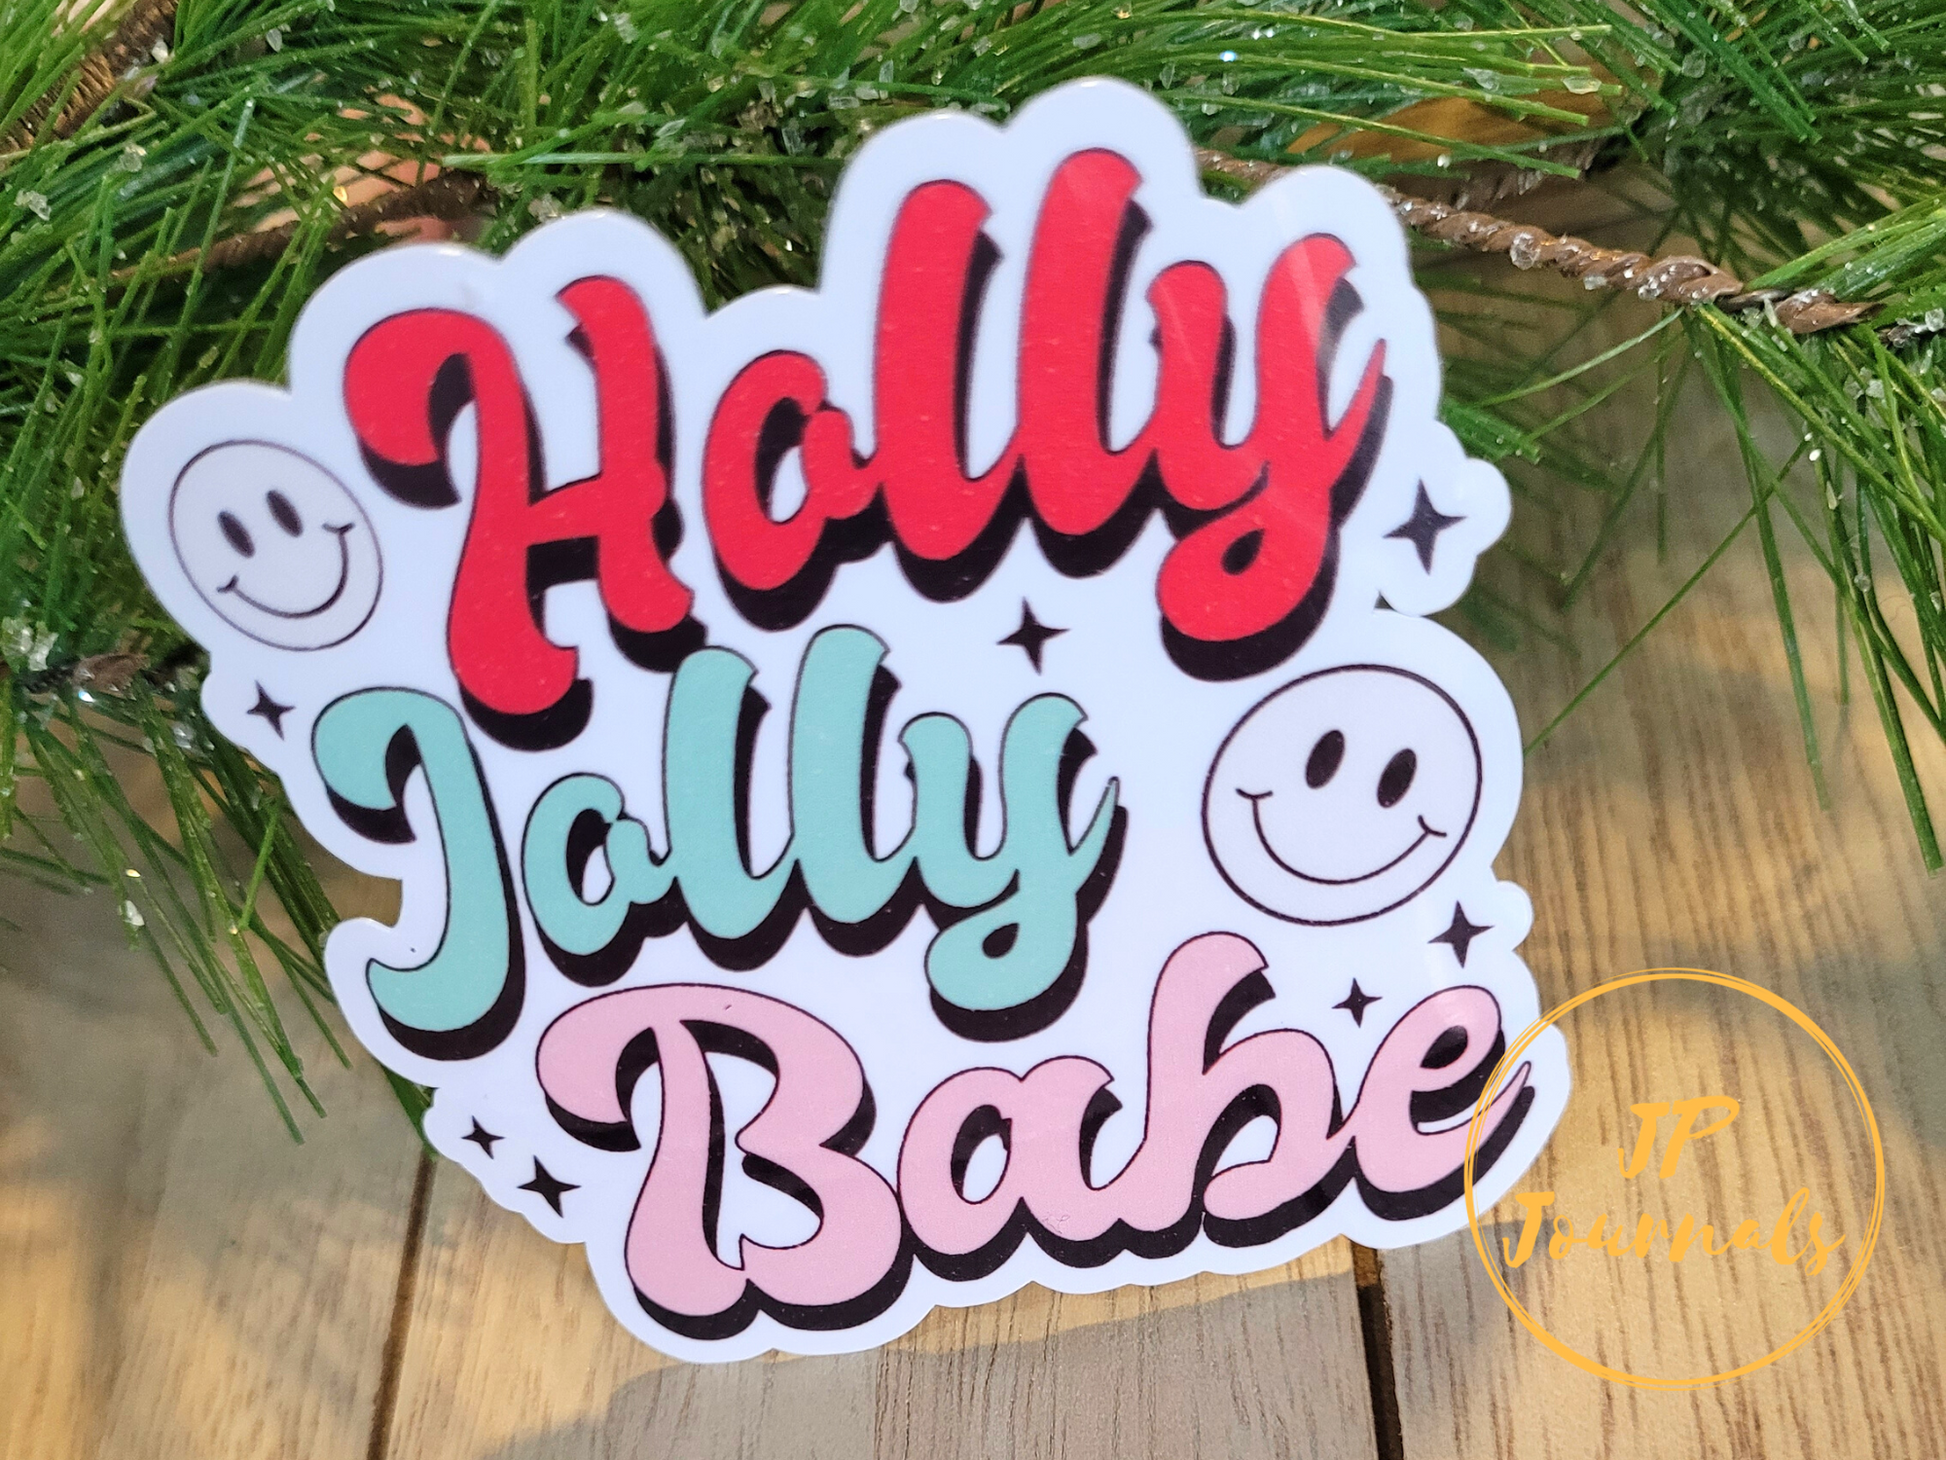 Holly Jolly planner stickers, Planner sticker kit, Holiday sticker